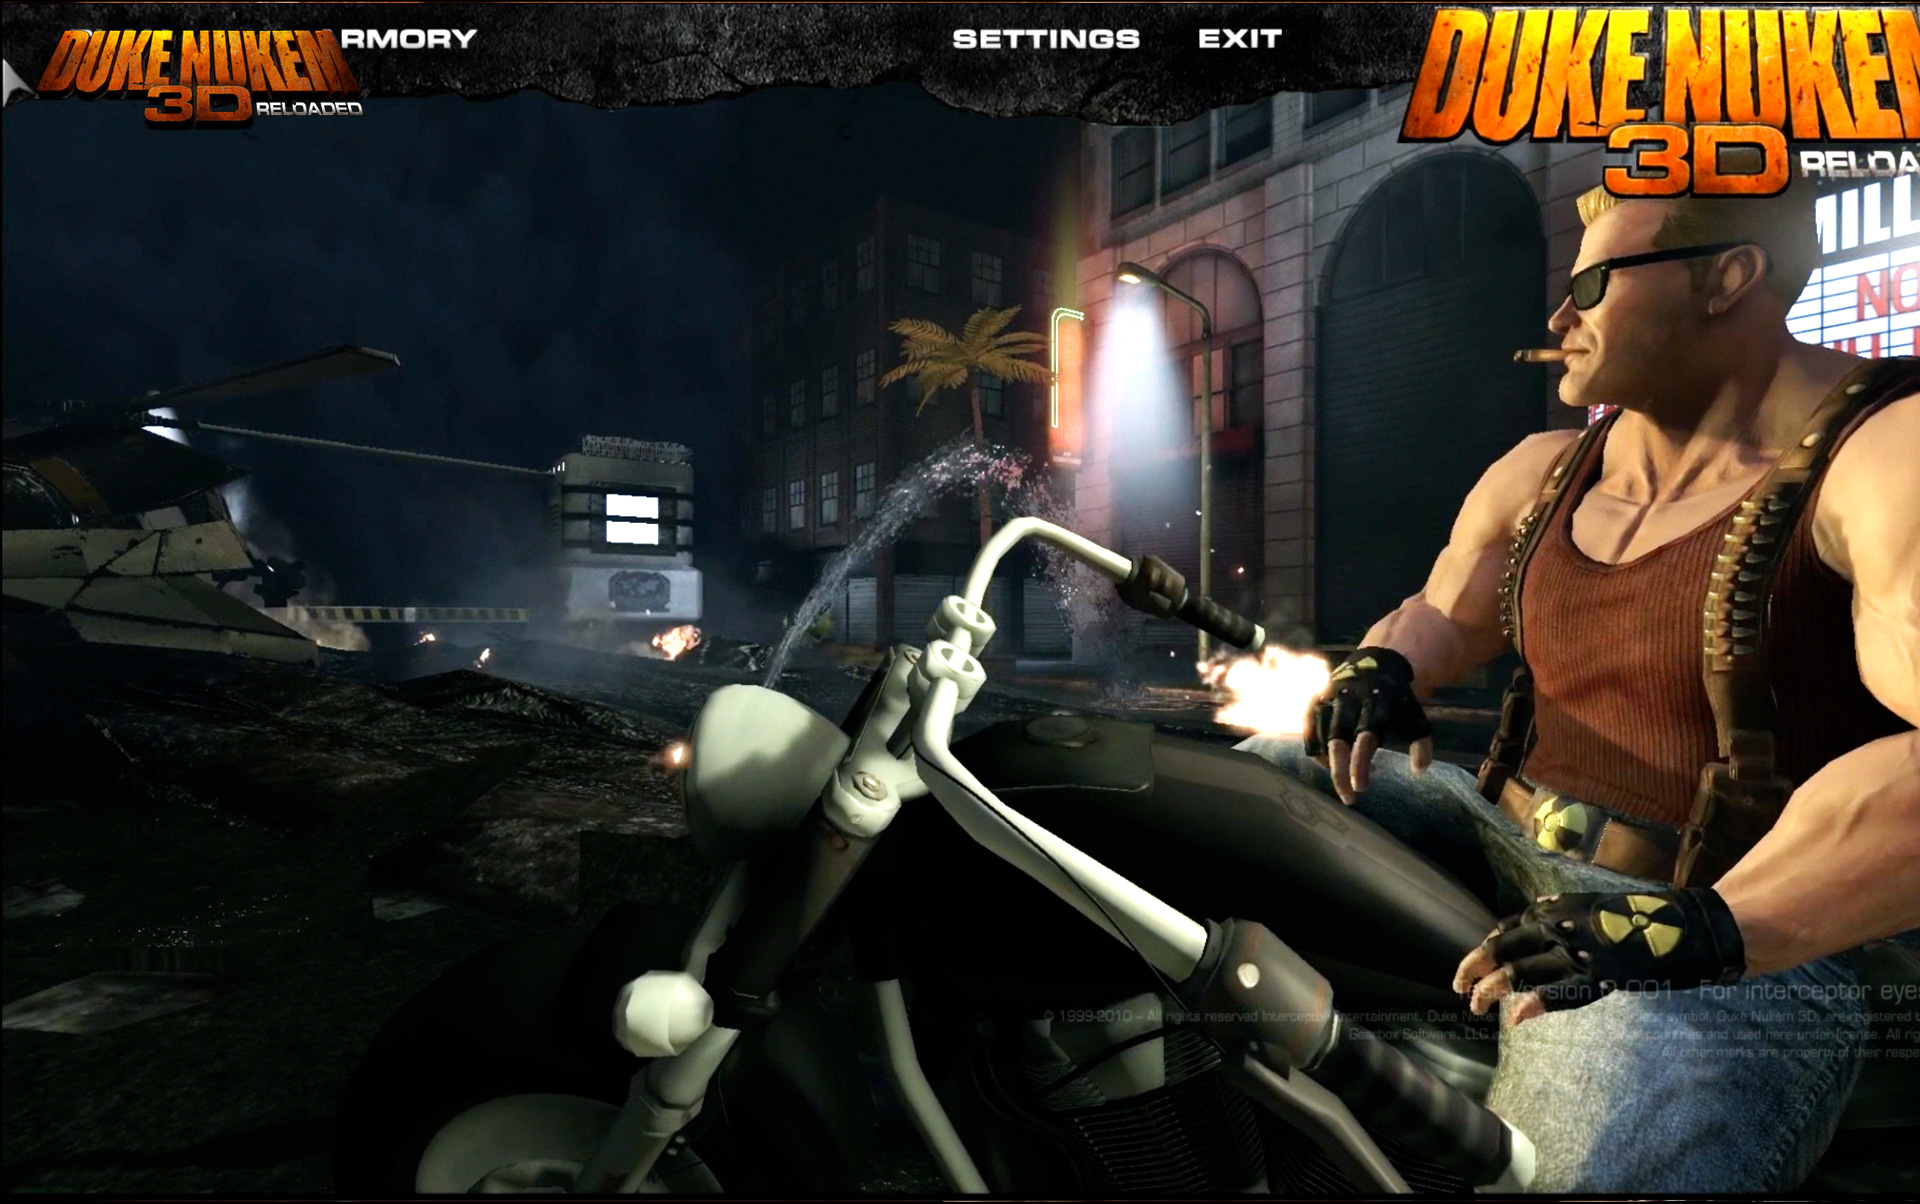 Immagine pubblicata in relazione al seguente contenuto: Da Interceptor nuovi screenshots di Duke Nukem 3D: Reloaded | Nome immagine: news15788_3.jpg